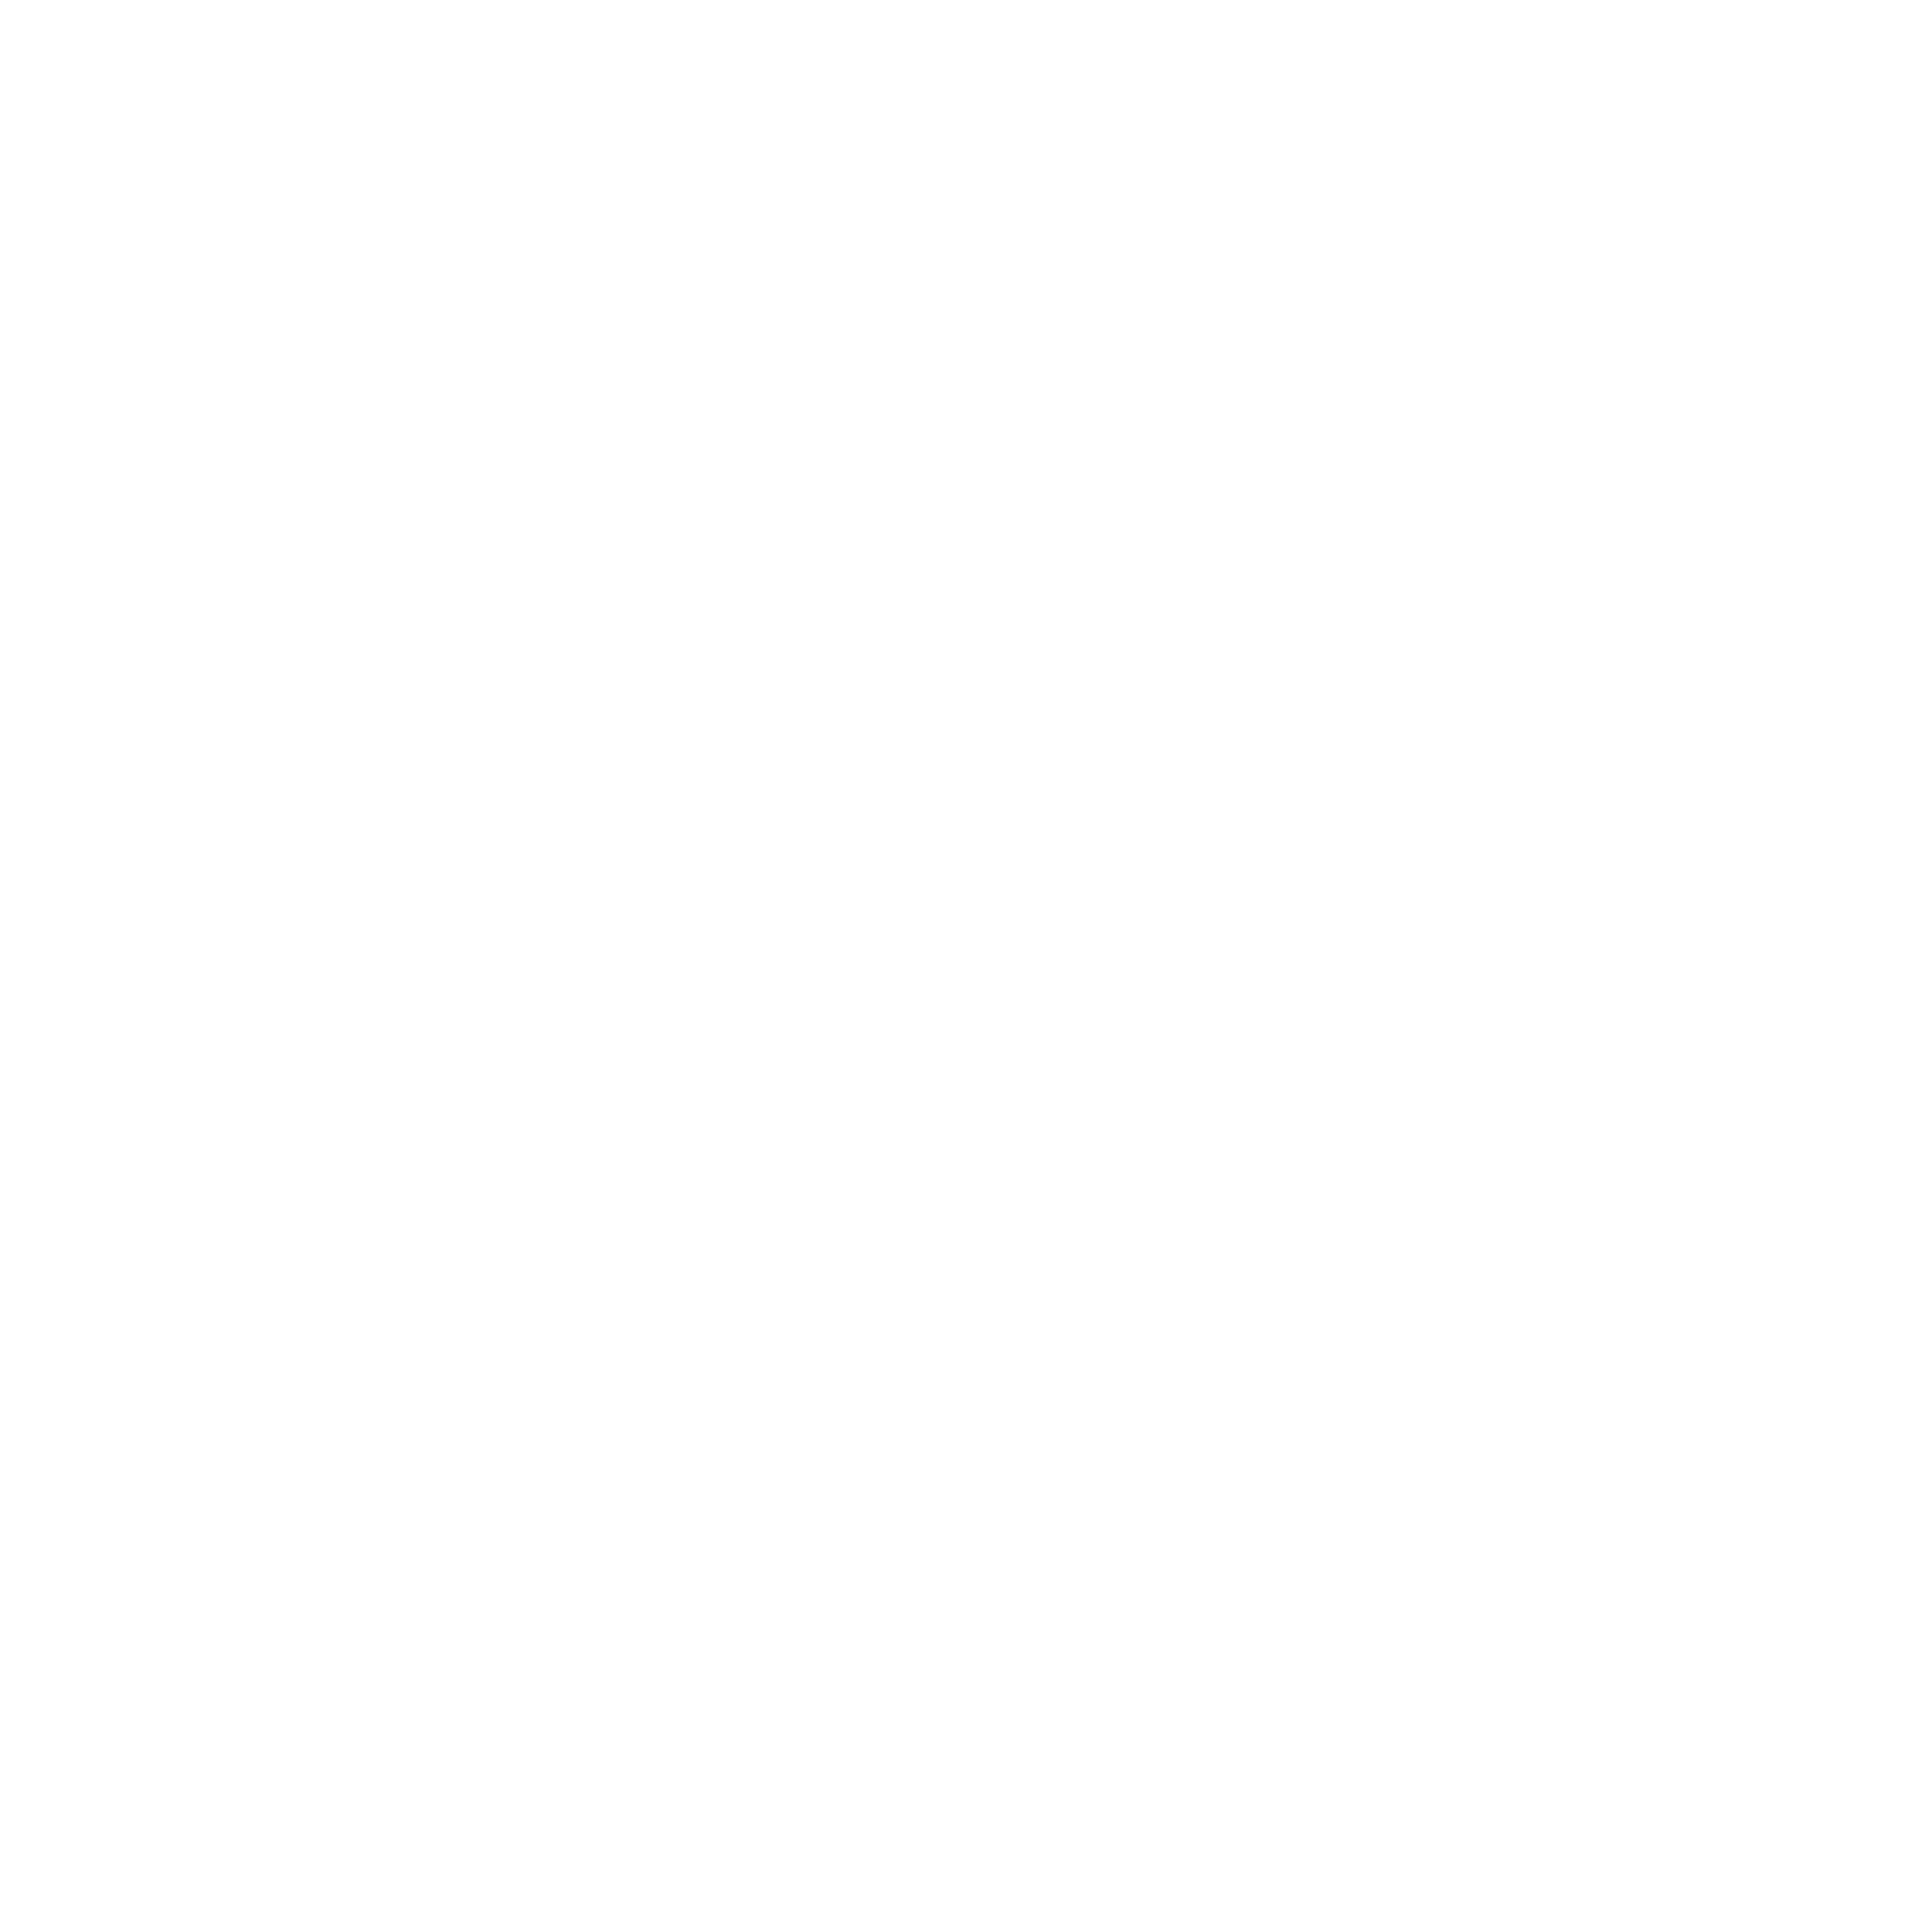 Cross_icon_(white).svg